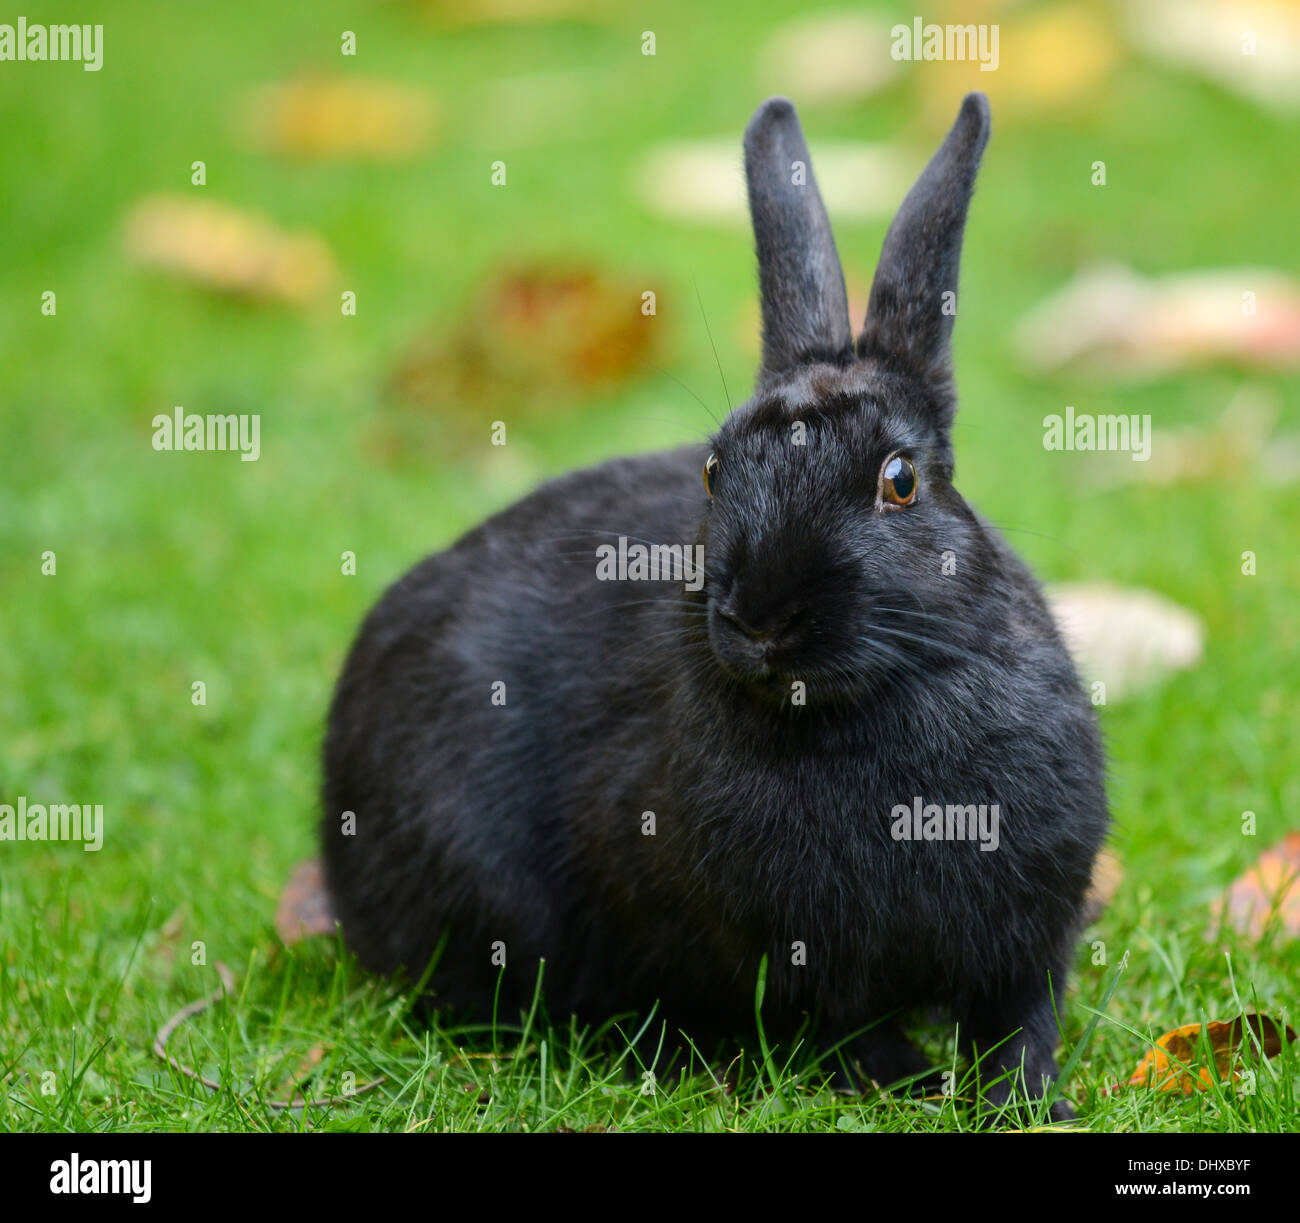 Black rabbit portrait Stock Photo